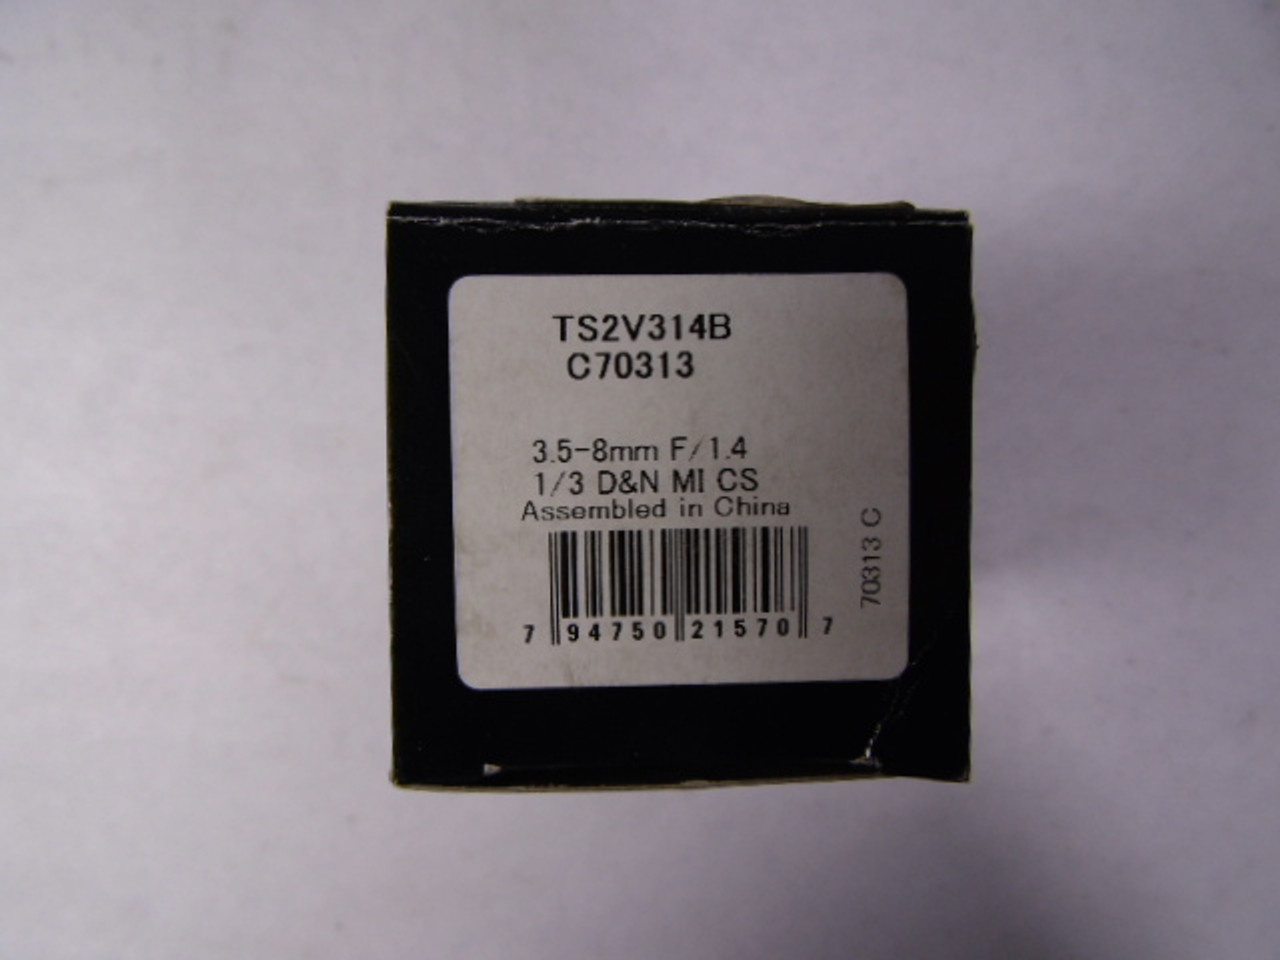 Cosmicar C70313 TS2V314B Manual Varifocal Lens 3.5-8mm ! NEW !